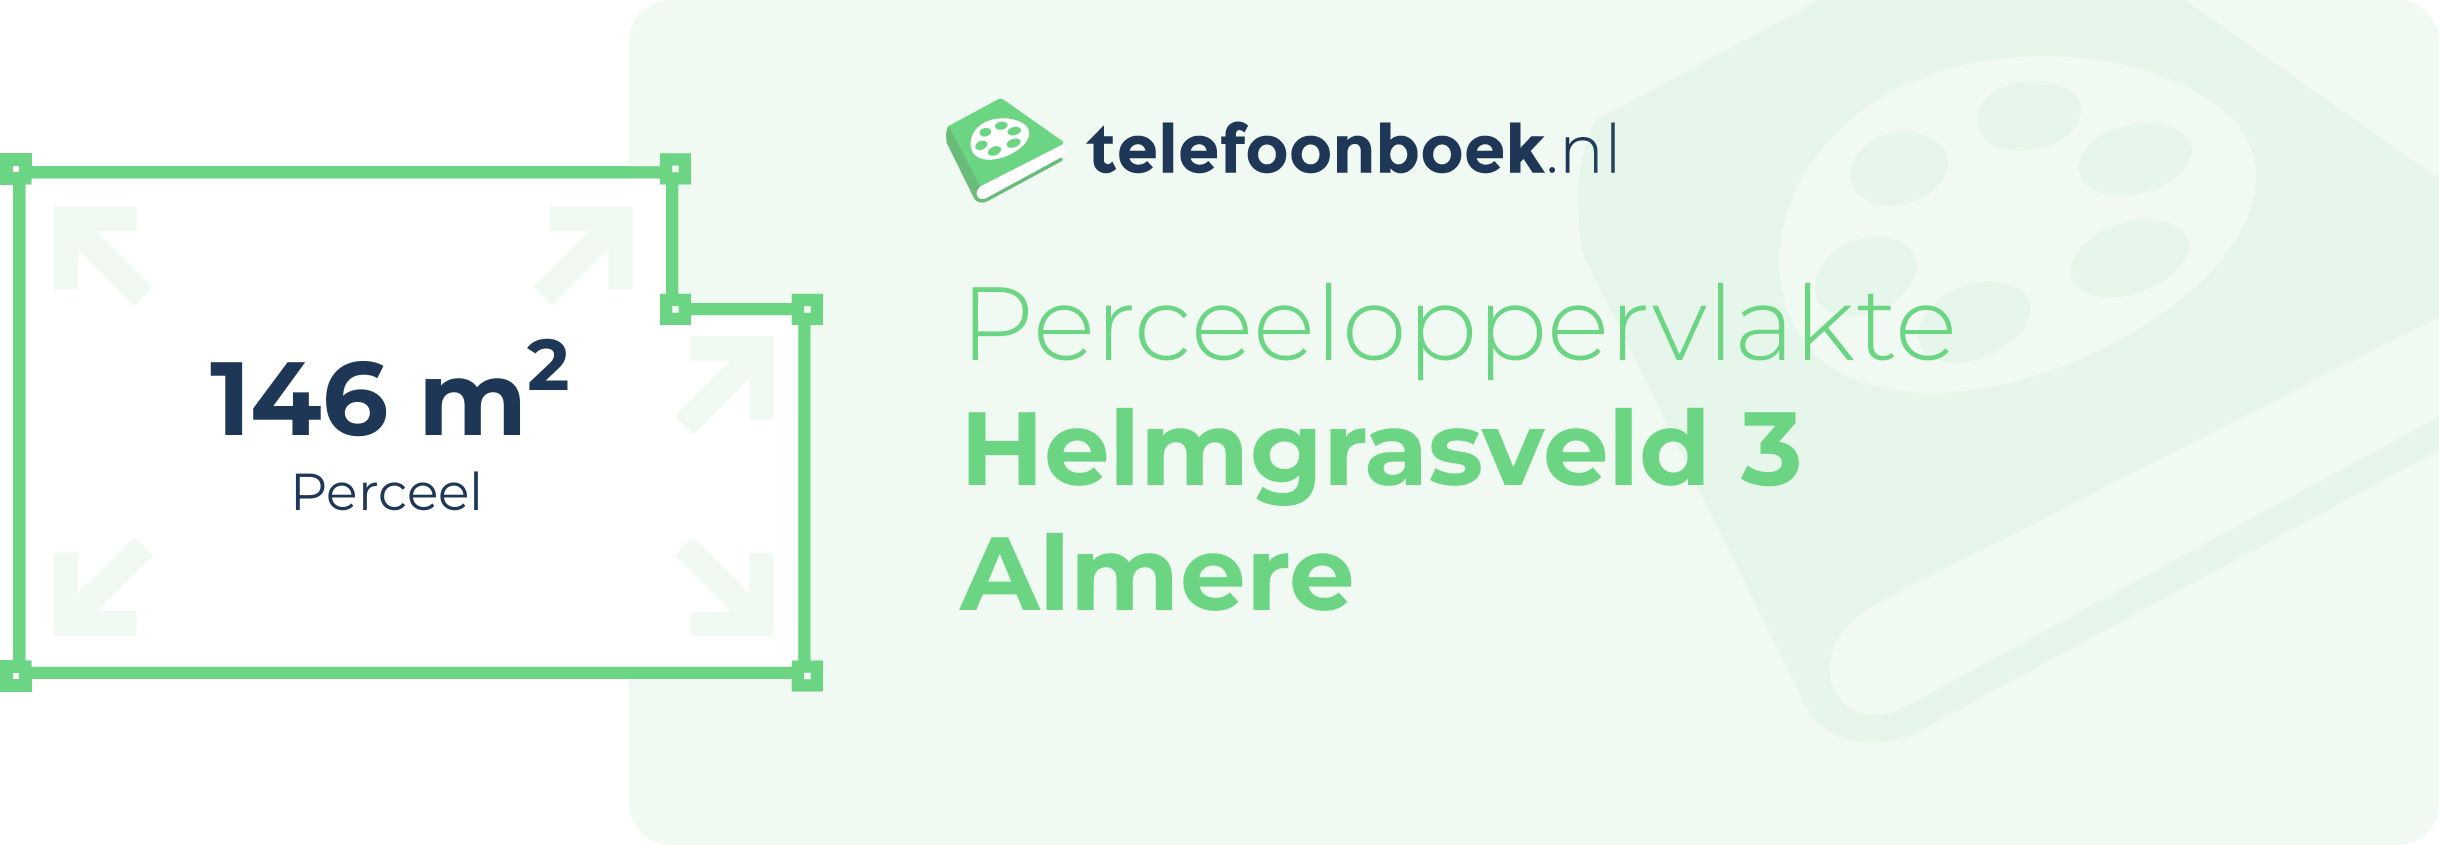 Perceeloppervlakte Helmgrasveld 3 Almere